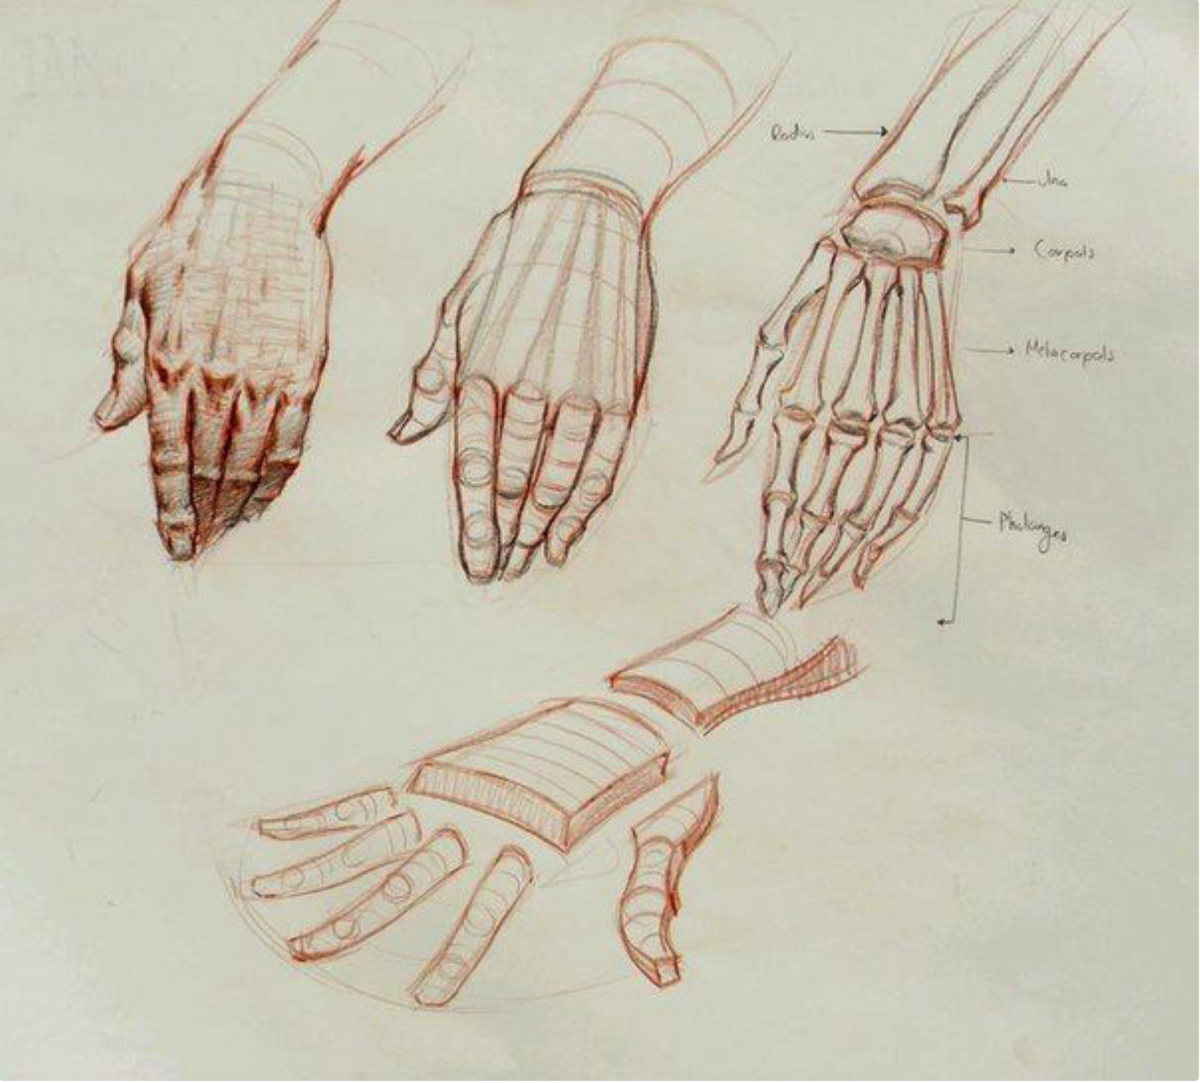 Груки. Анатомия Баммес кисти рук. Анатомия кисти референс. Руки референс анатомия кисти. Скелет кисти руки человека референс.